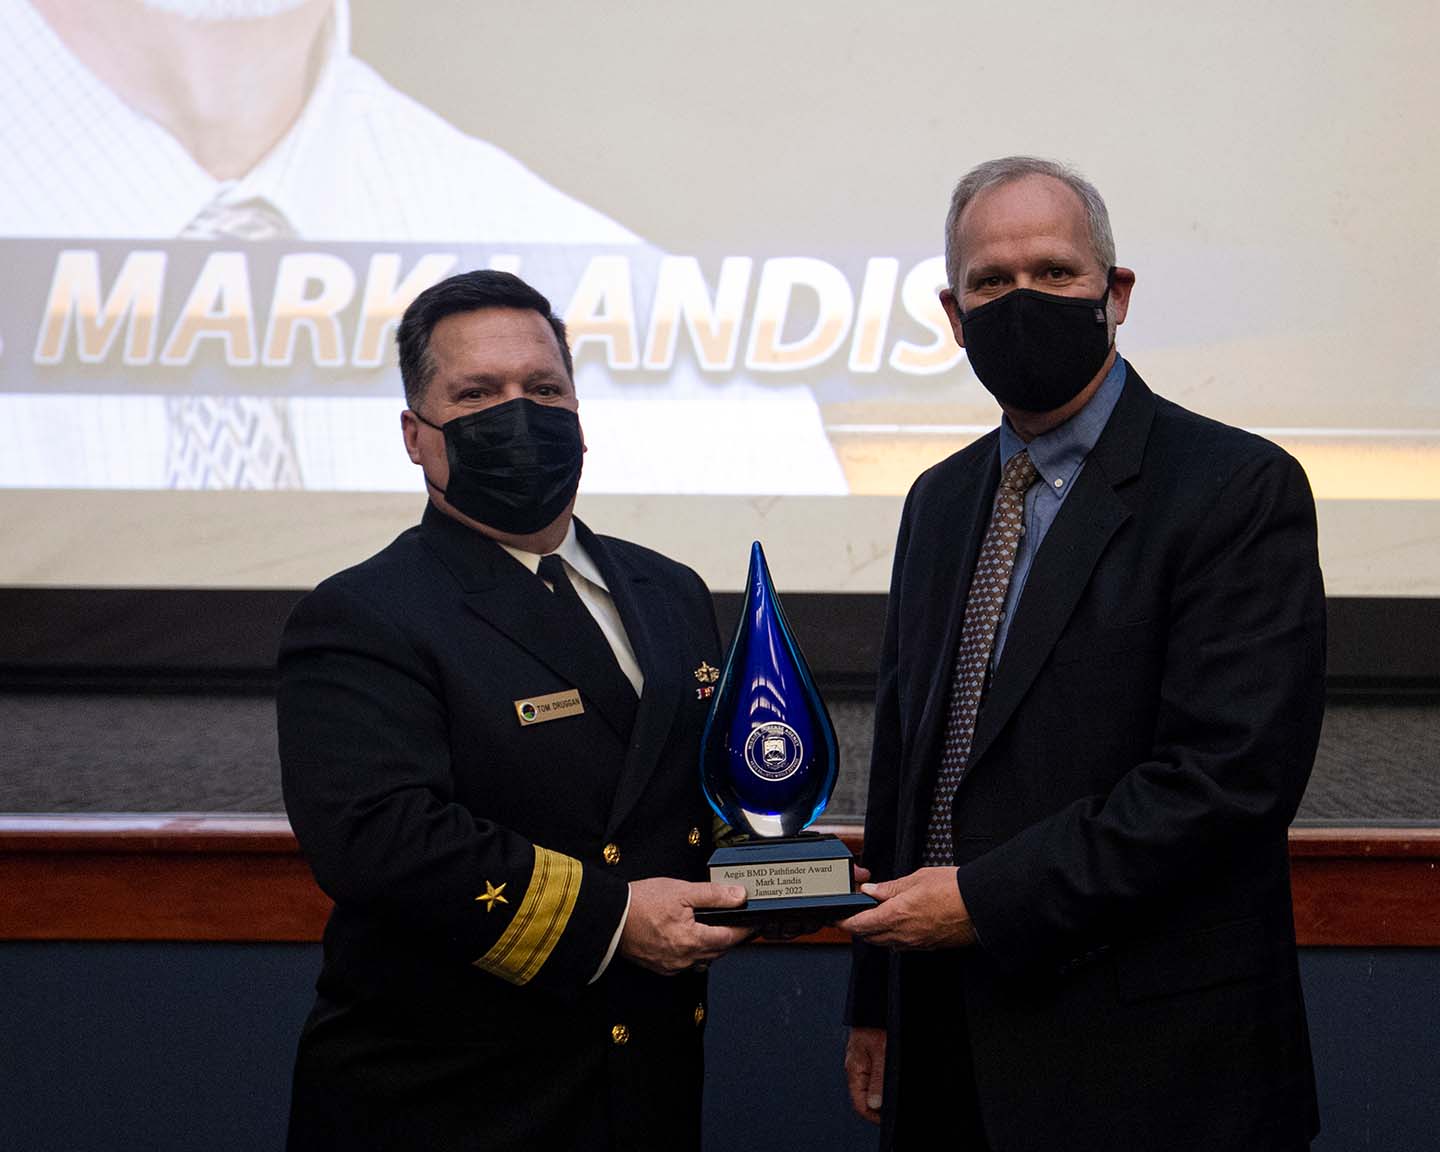 Mark Landis received the 2022 Aegis Ballistic Missile Defense Pathfinder award